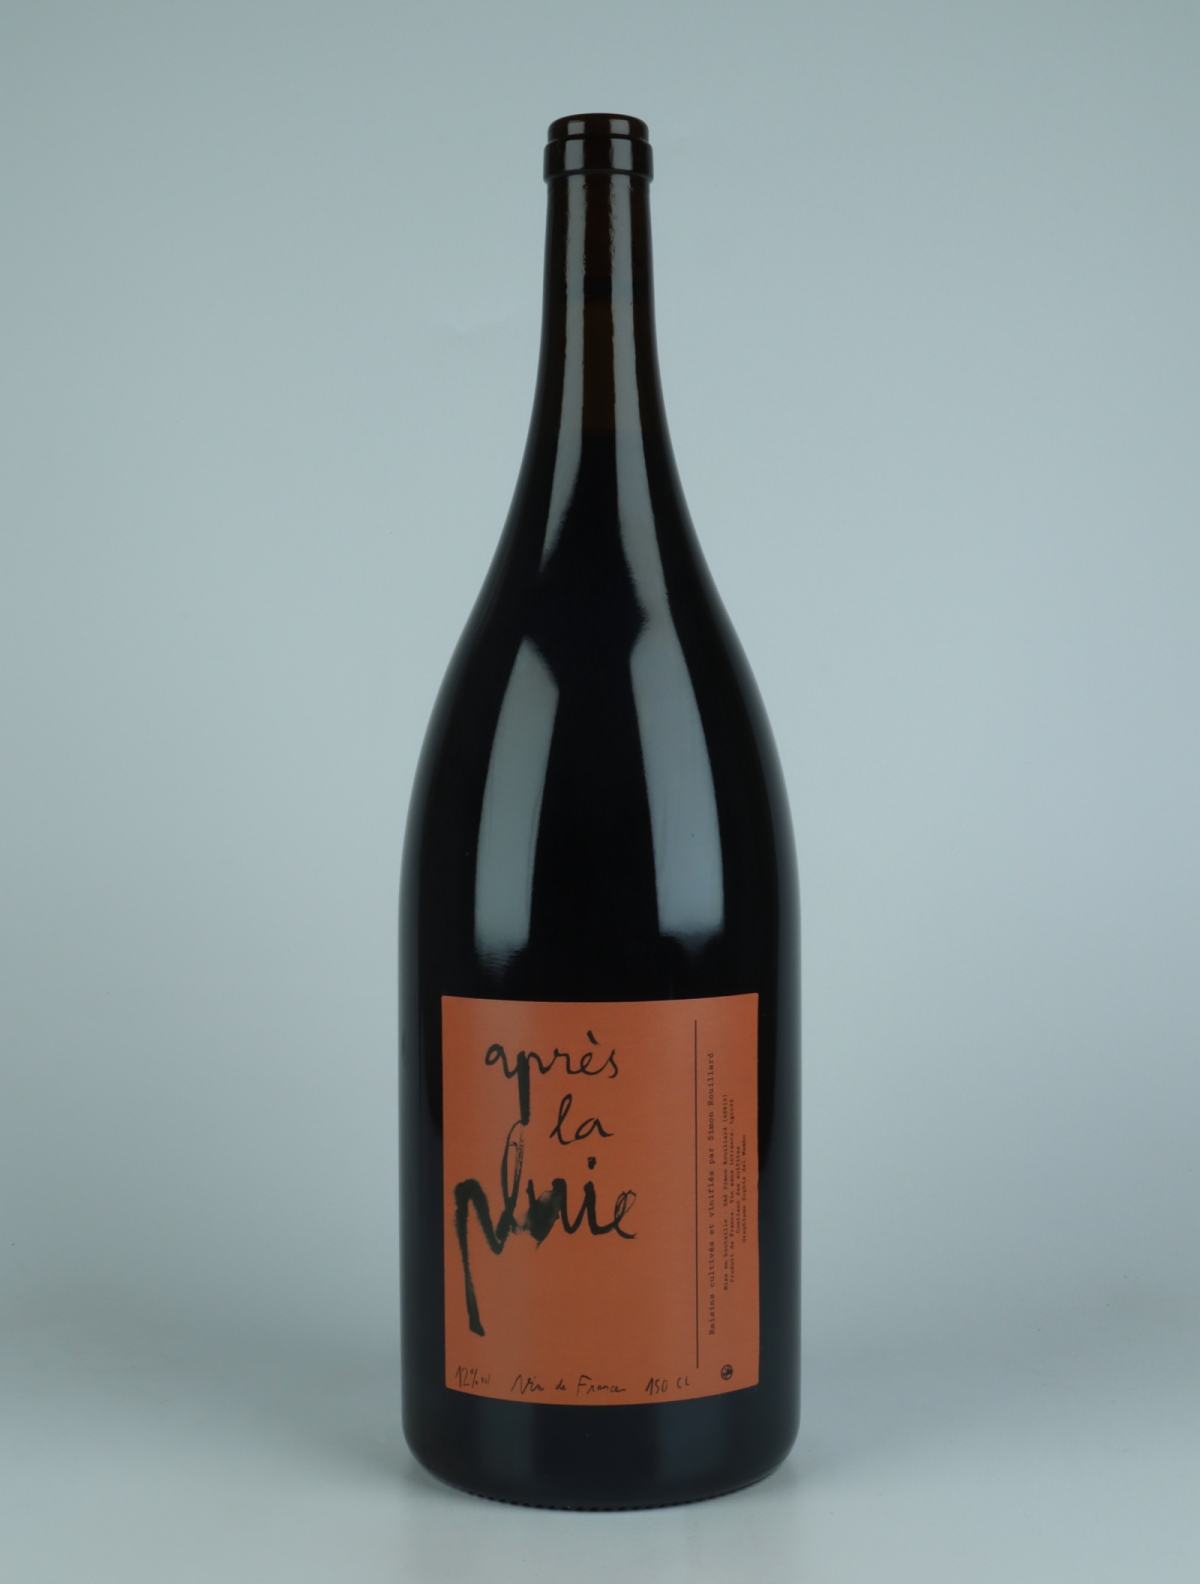 A bottle 2022 Après la pluie - Magnum Red wine from Simon Rouillard, Loire in France